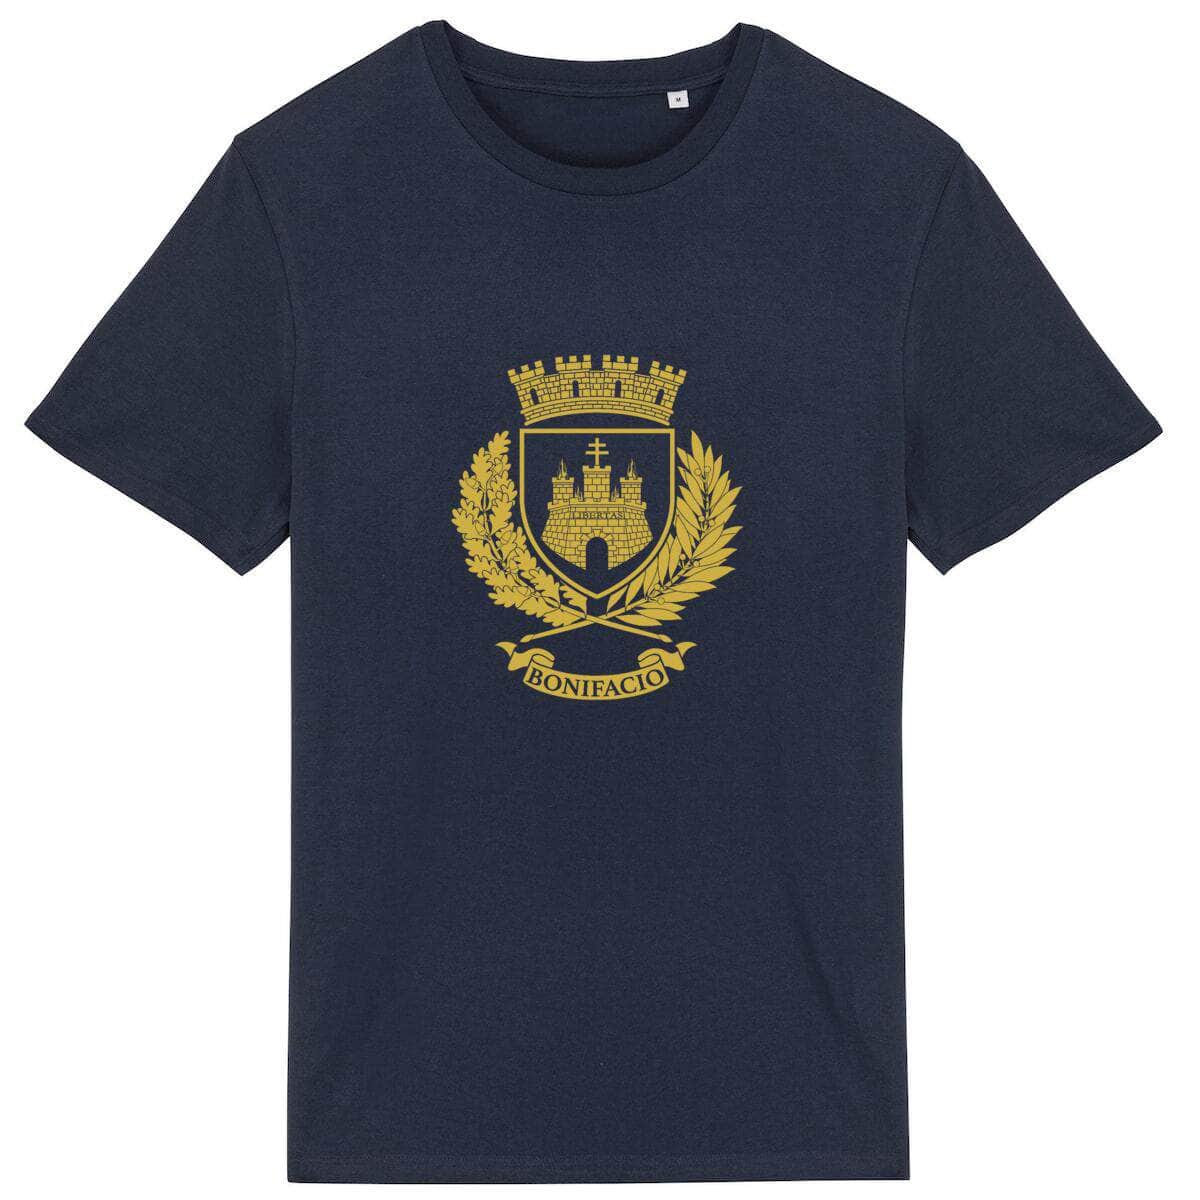 T-shirt - Armoiries de Bonifacio Marine / XS